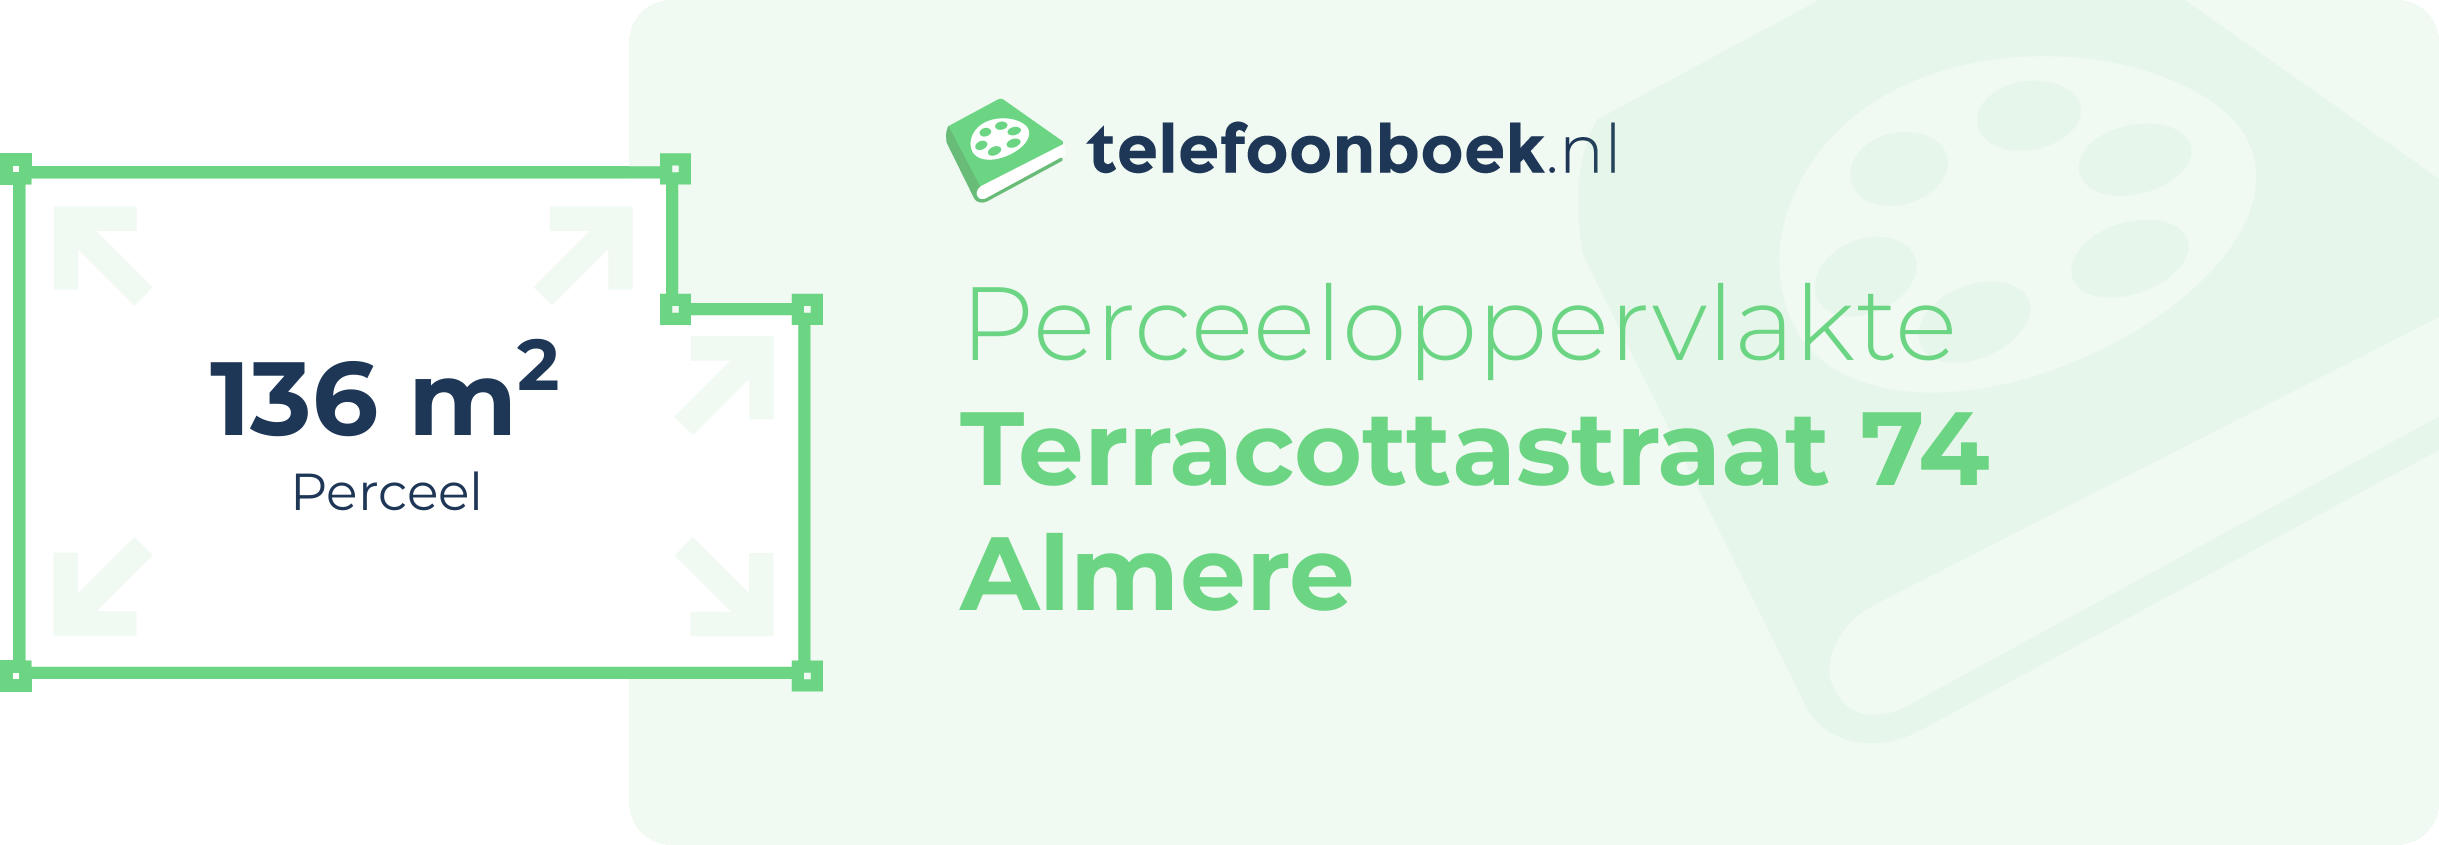 Perceeloppervlakte Terracottastraat 74 Almere